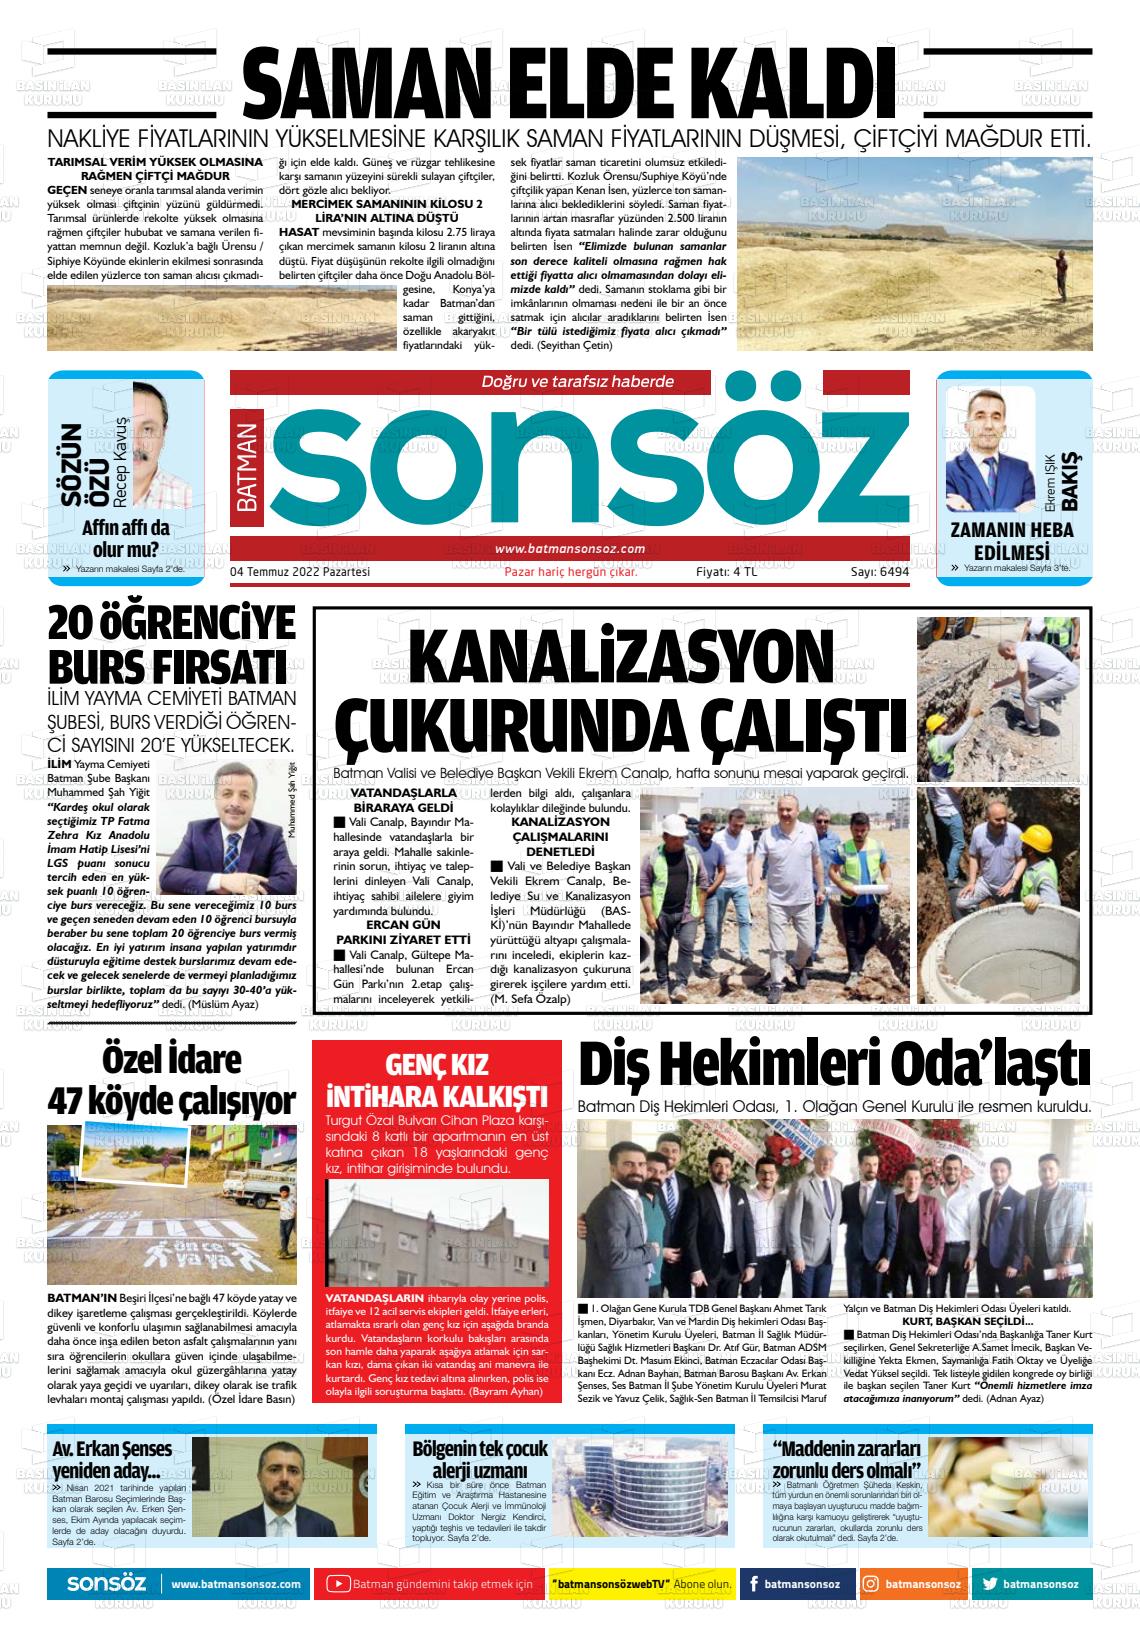 04 Temmuz 2022 Batman Sonsöz Gazete Manşeti